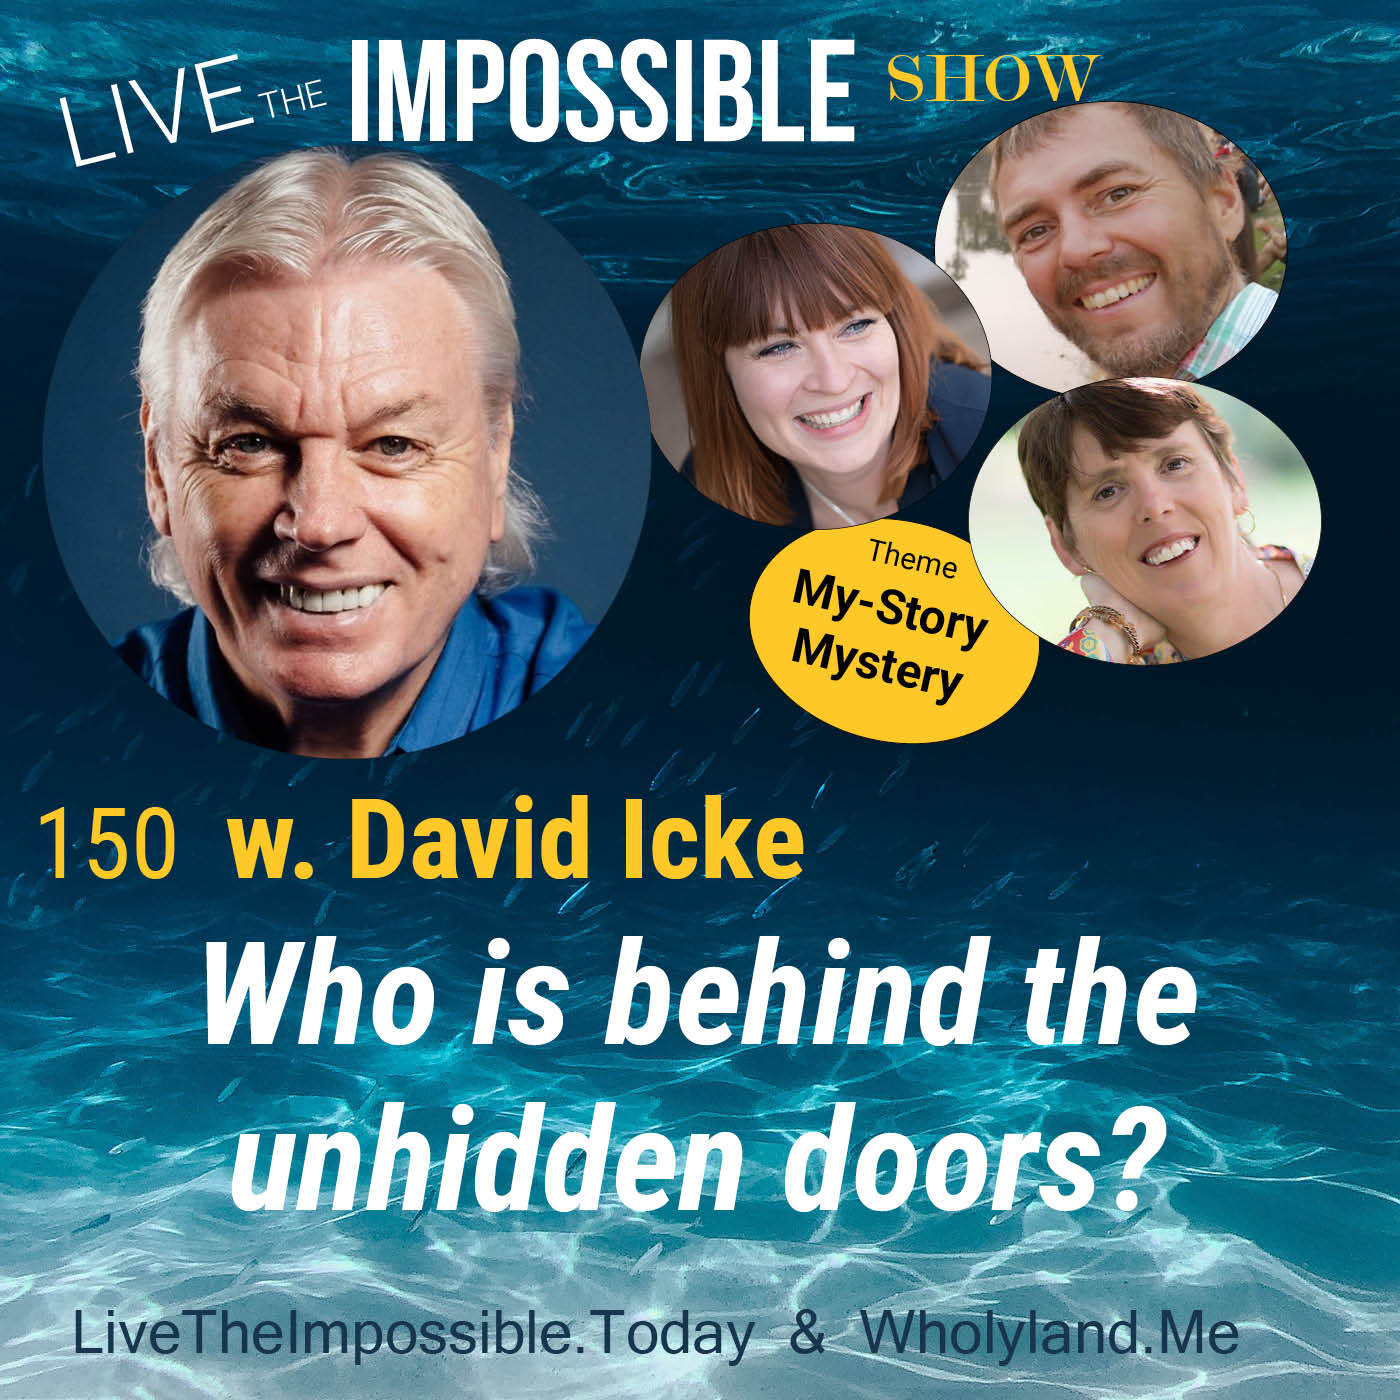 150 Who is behind the unhidden doors? w. David Icke